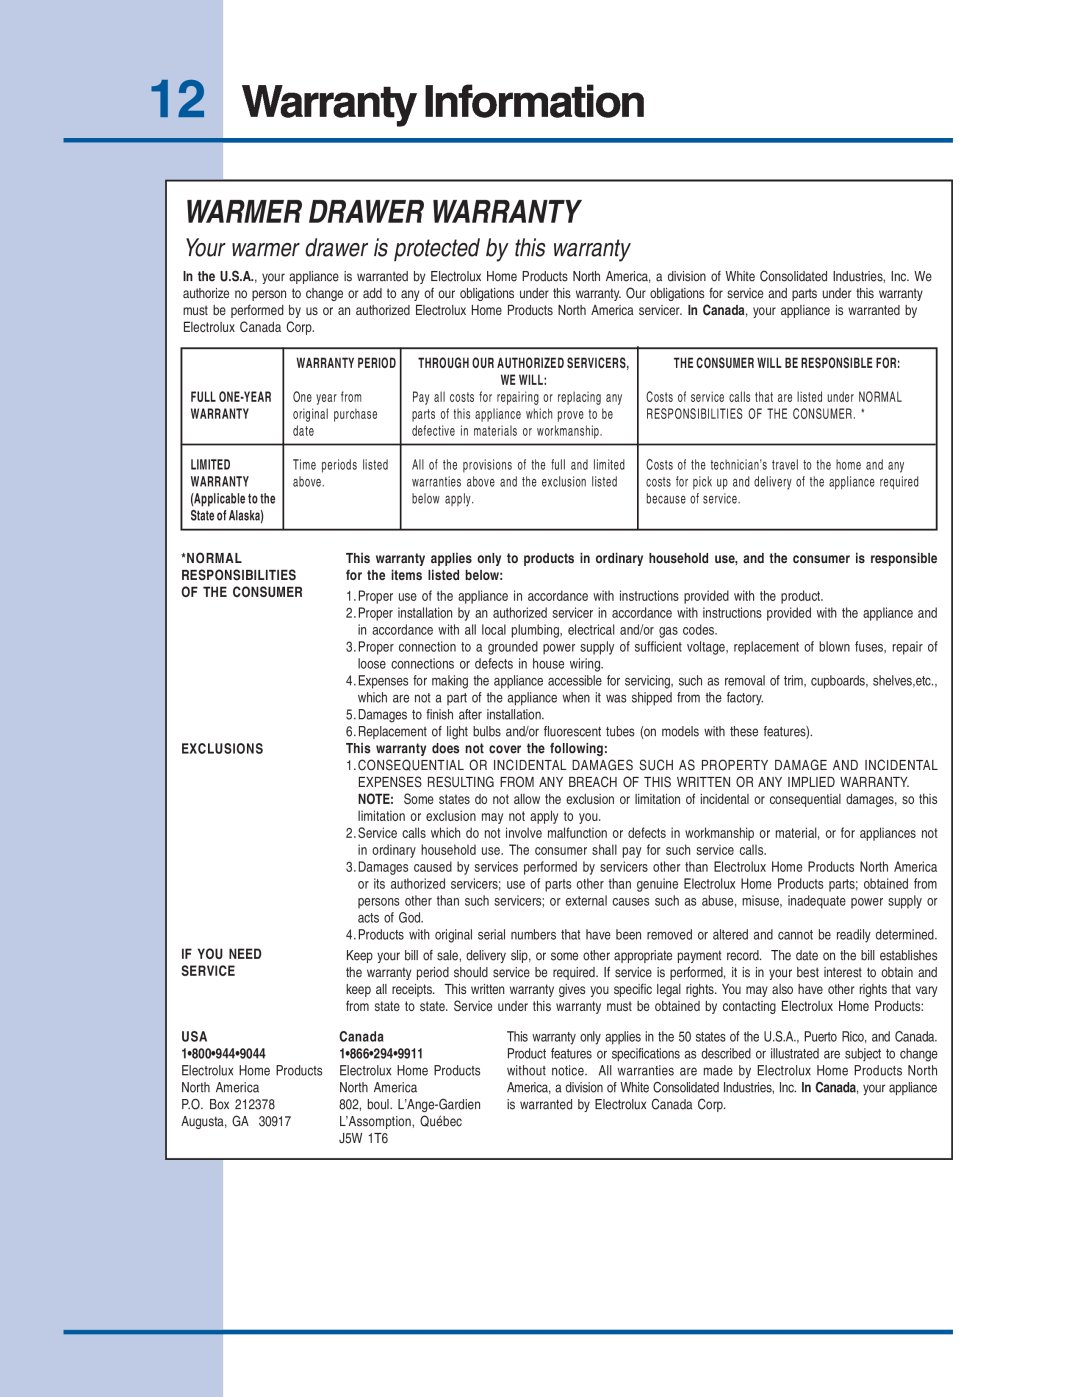 Electrolux Warm & Serve Drawer manual Warranty Information, Warmer Drawer Warranty 